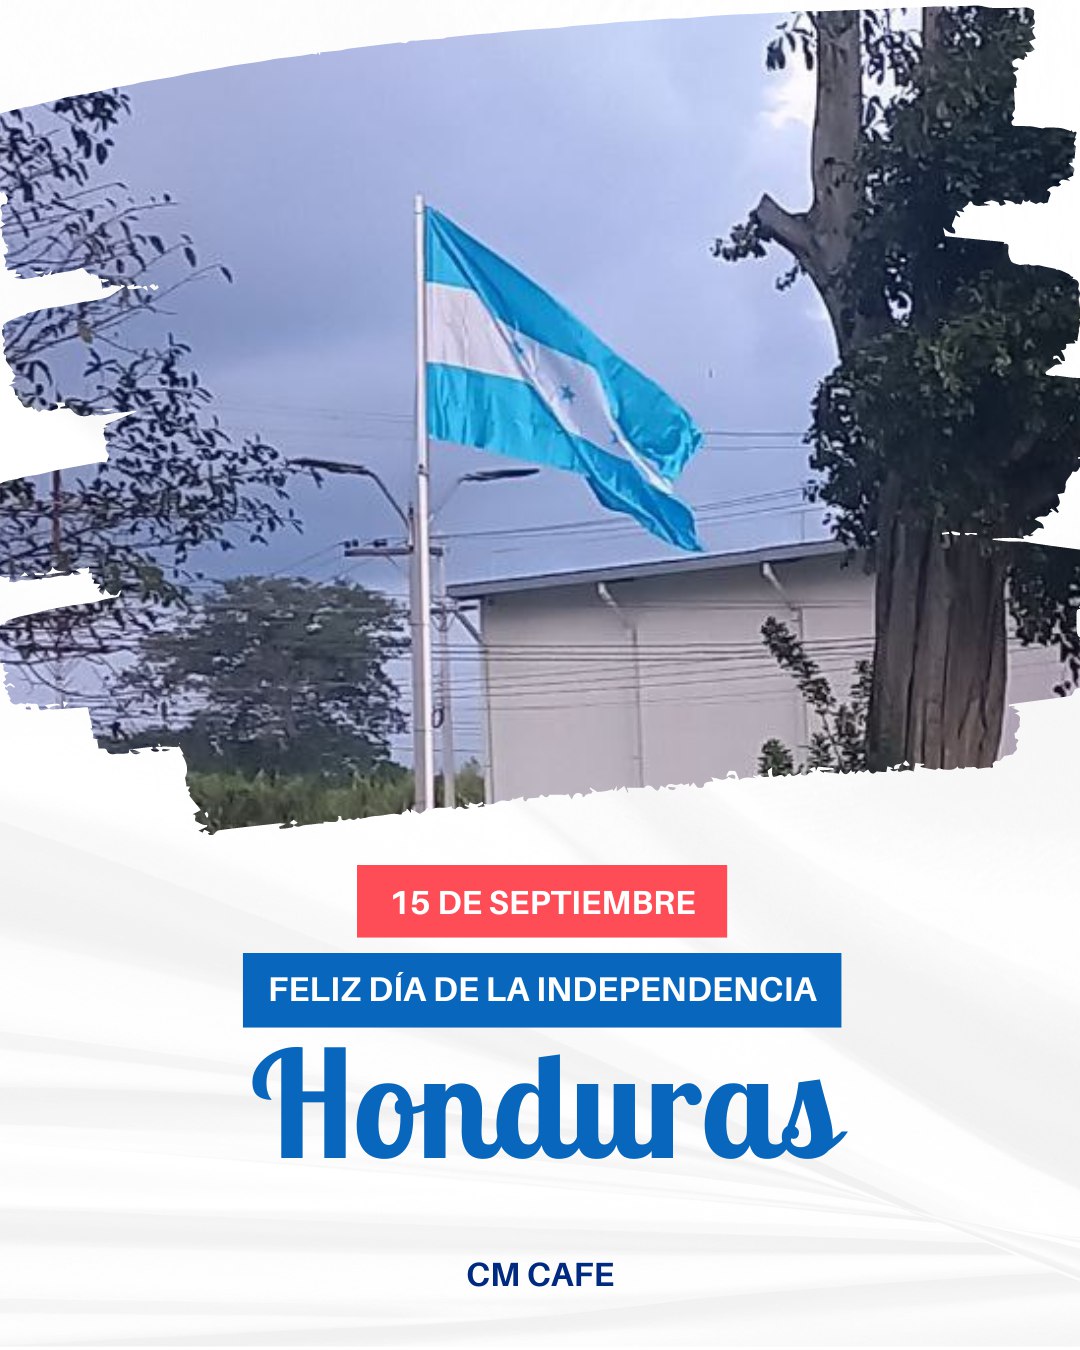 HONDURAS INDEPENDENCE DAY